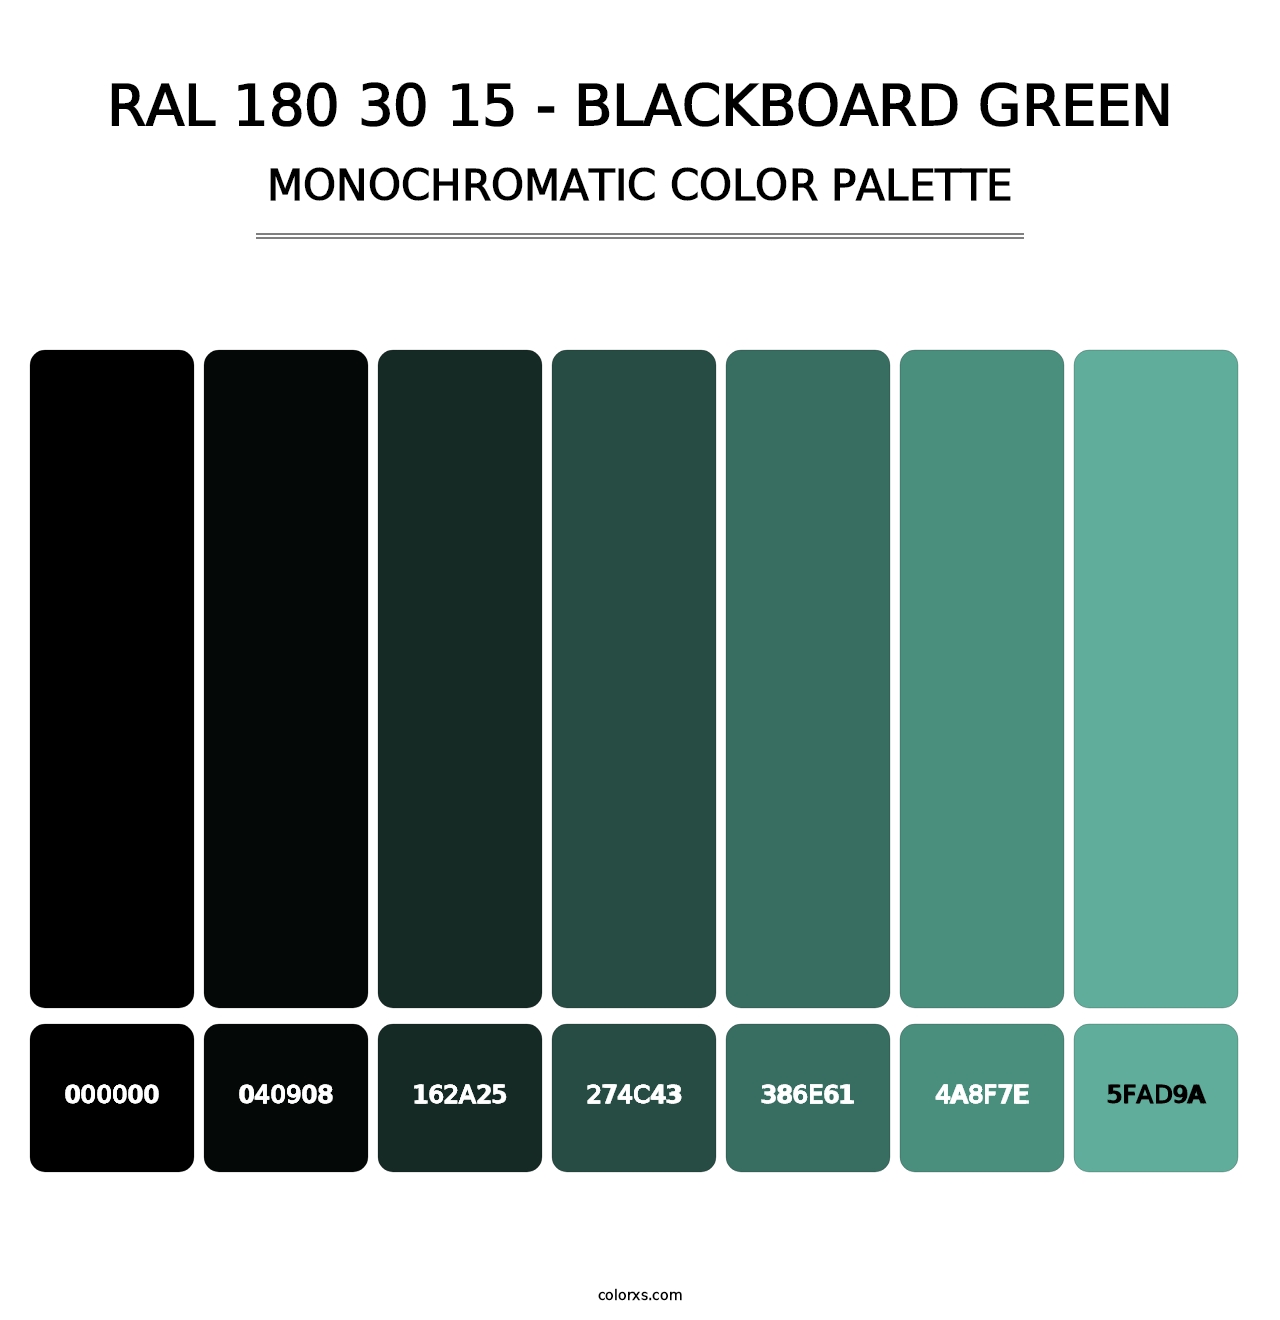 RAL 180 30 15 - Blackboard Green - Monochromatic Color Palette